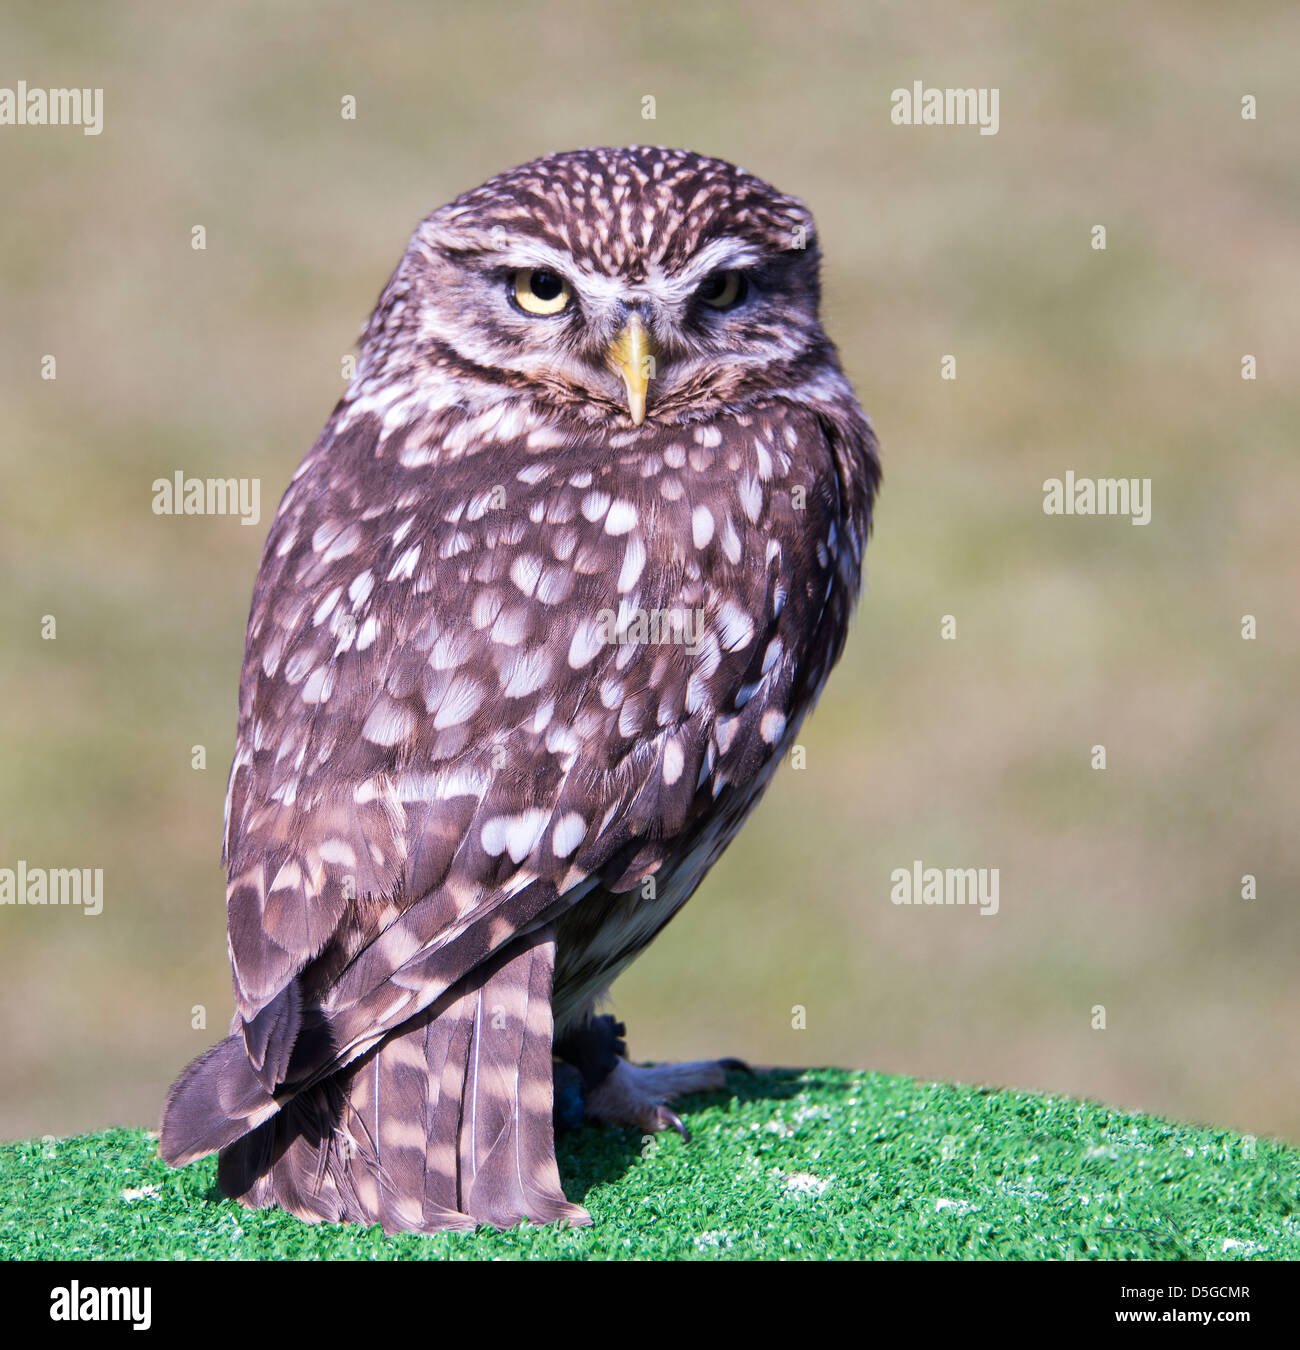 small screech owl on bird show Stock Photo